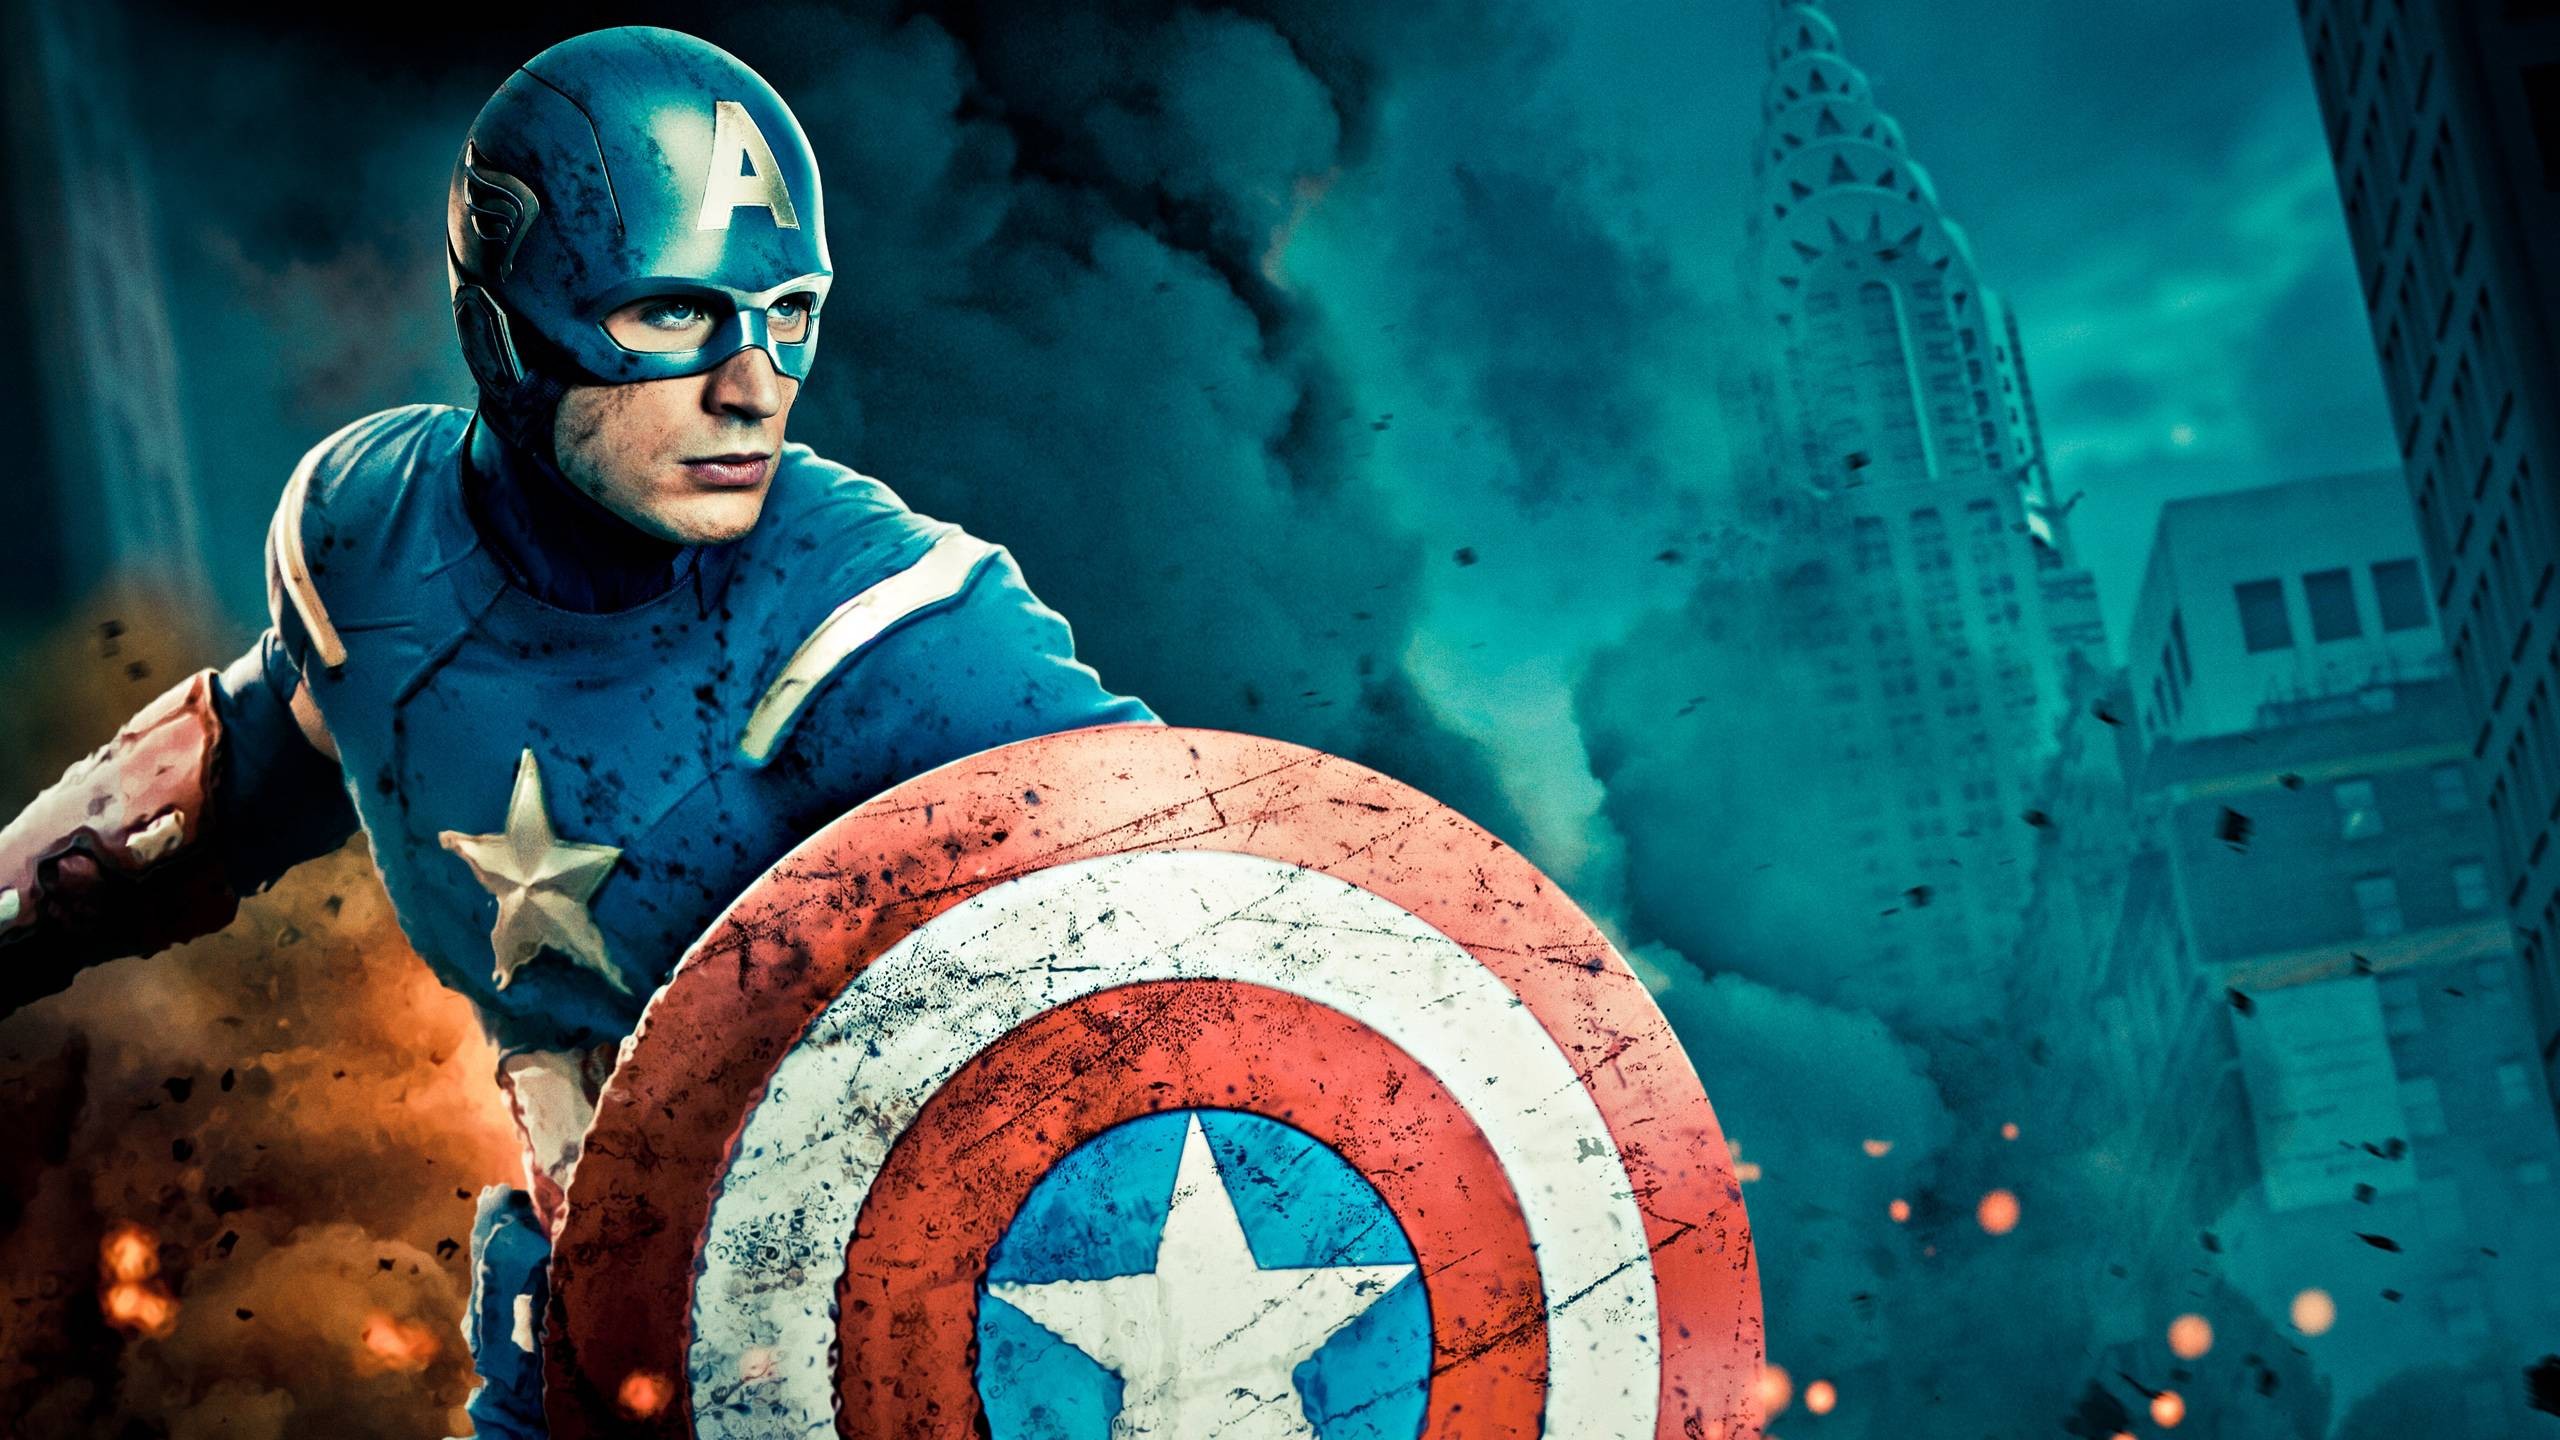 General 2560x1440 The Avengers Captain America Chris Evans Marvel Cinematic Universe superhero Marvel Comics actor